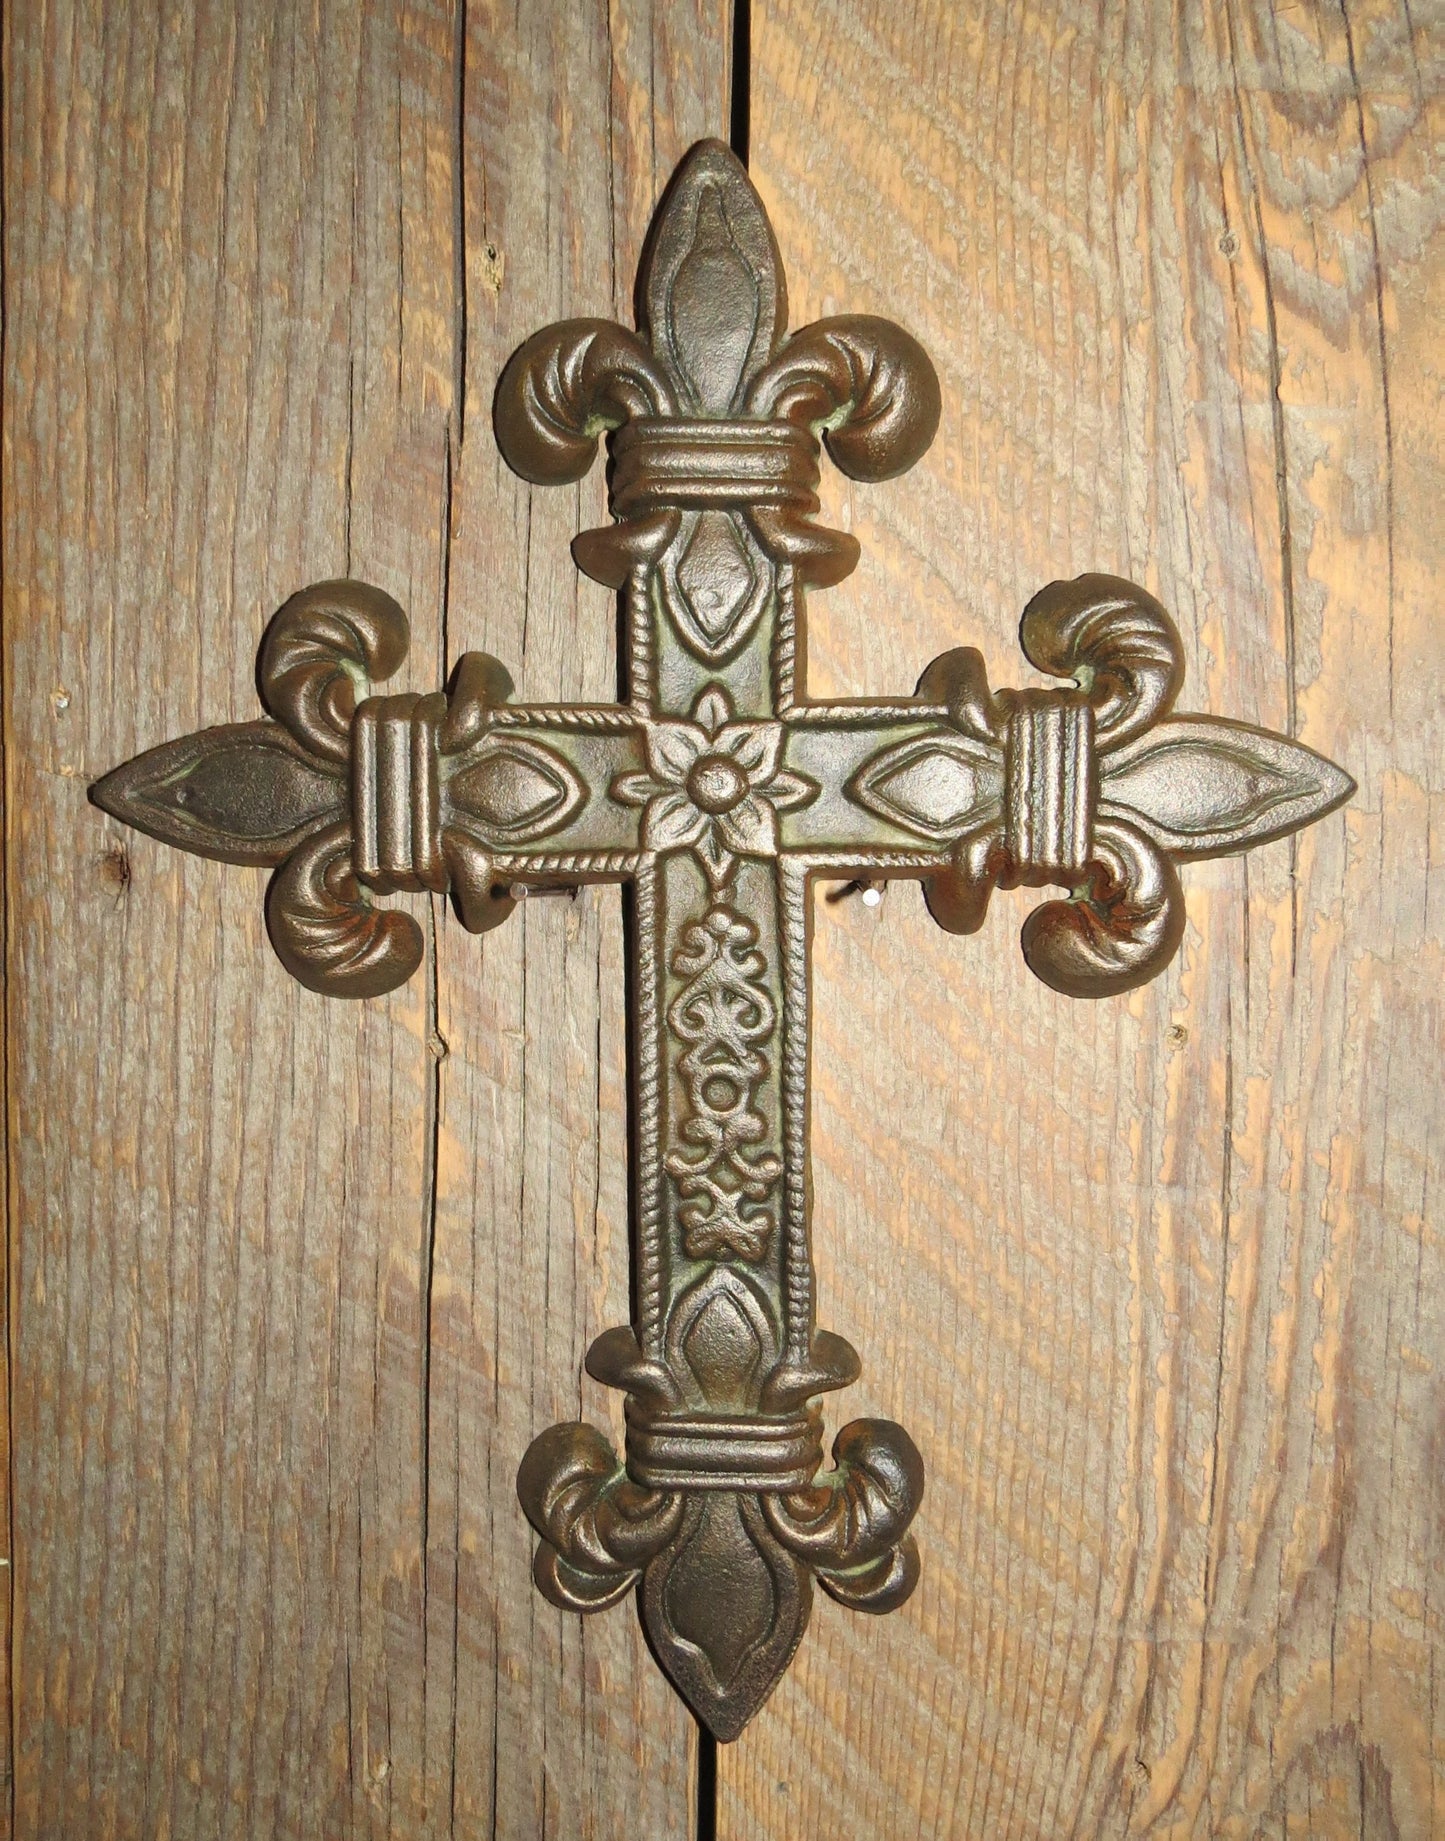 Natural Horsehsoe Cross with Heart, Cross Intertwined Heart Decor Faith  Art, Metal Cross Wall Art Decorb Vintage Art Horseshoe Cross Sculpture for